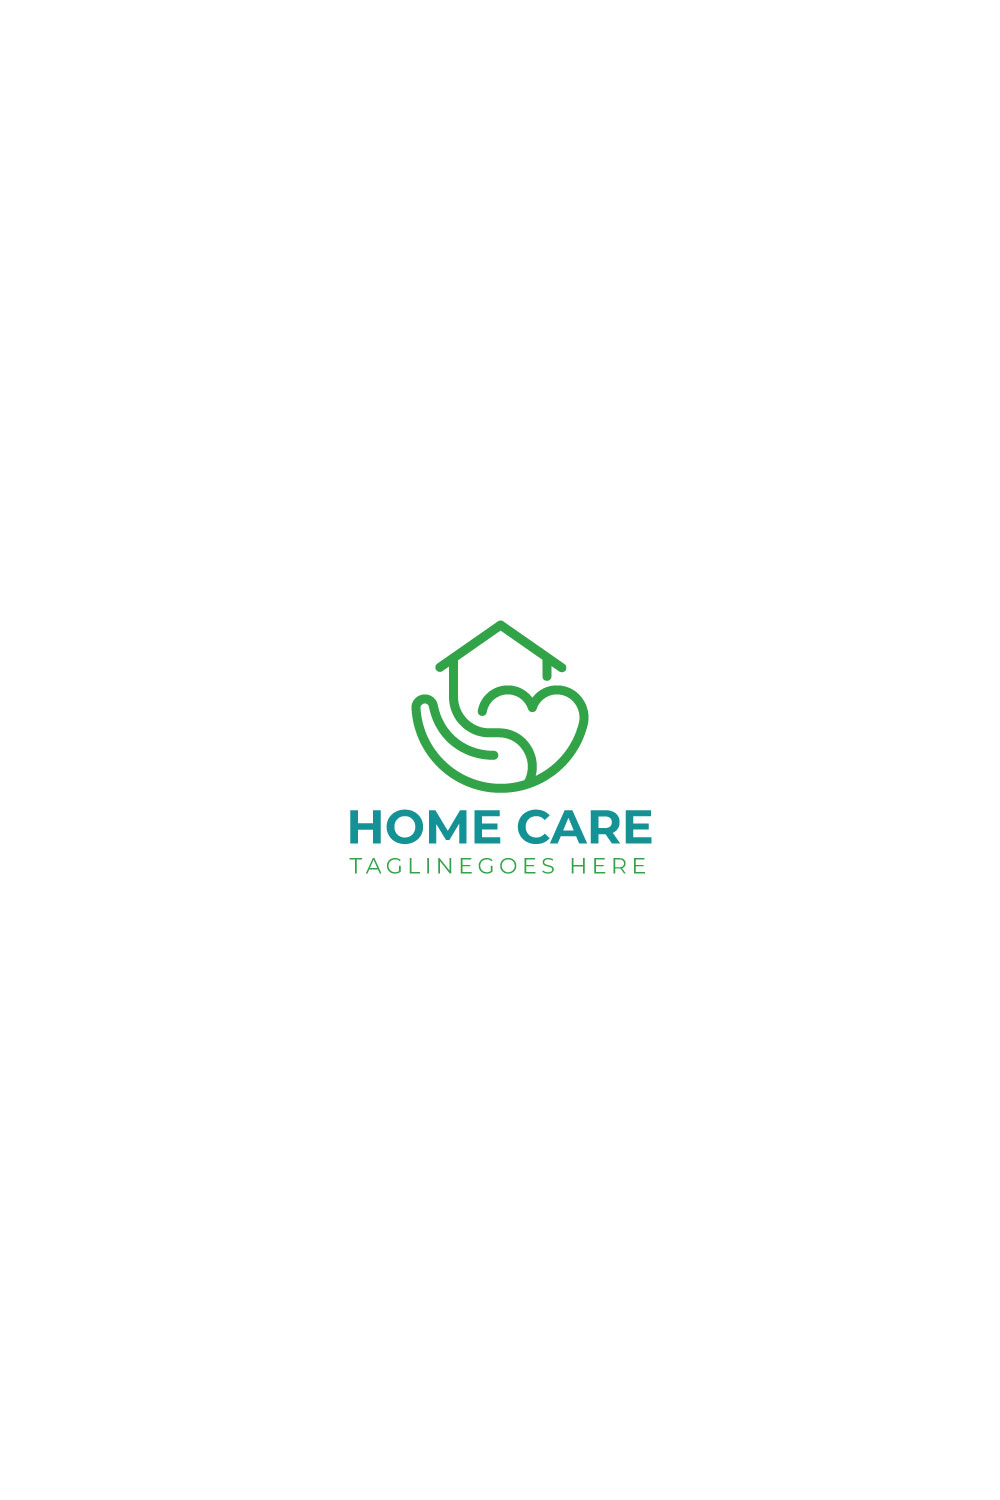 Home care logo design vector template illustration design pinterest preview image.